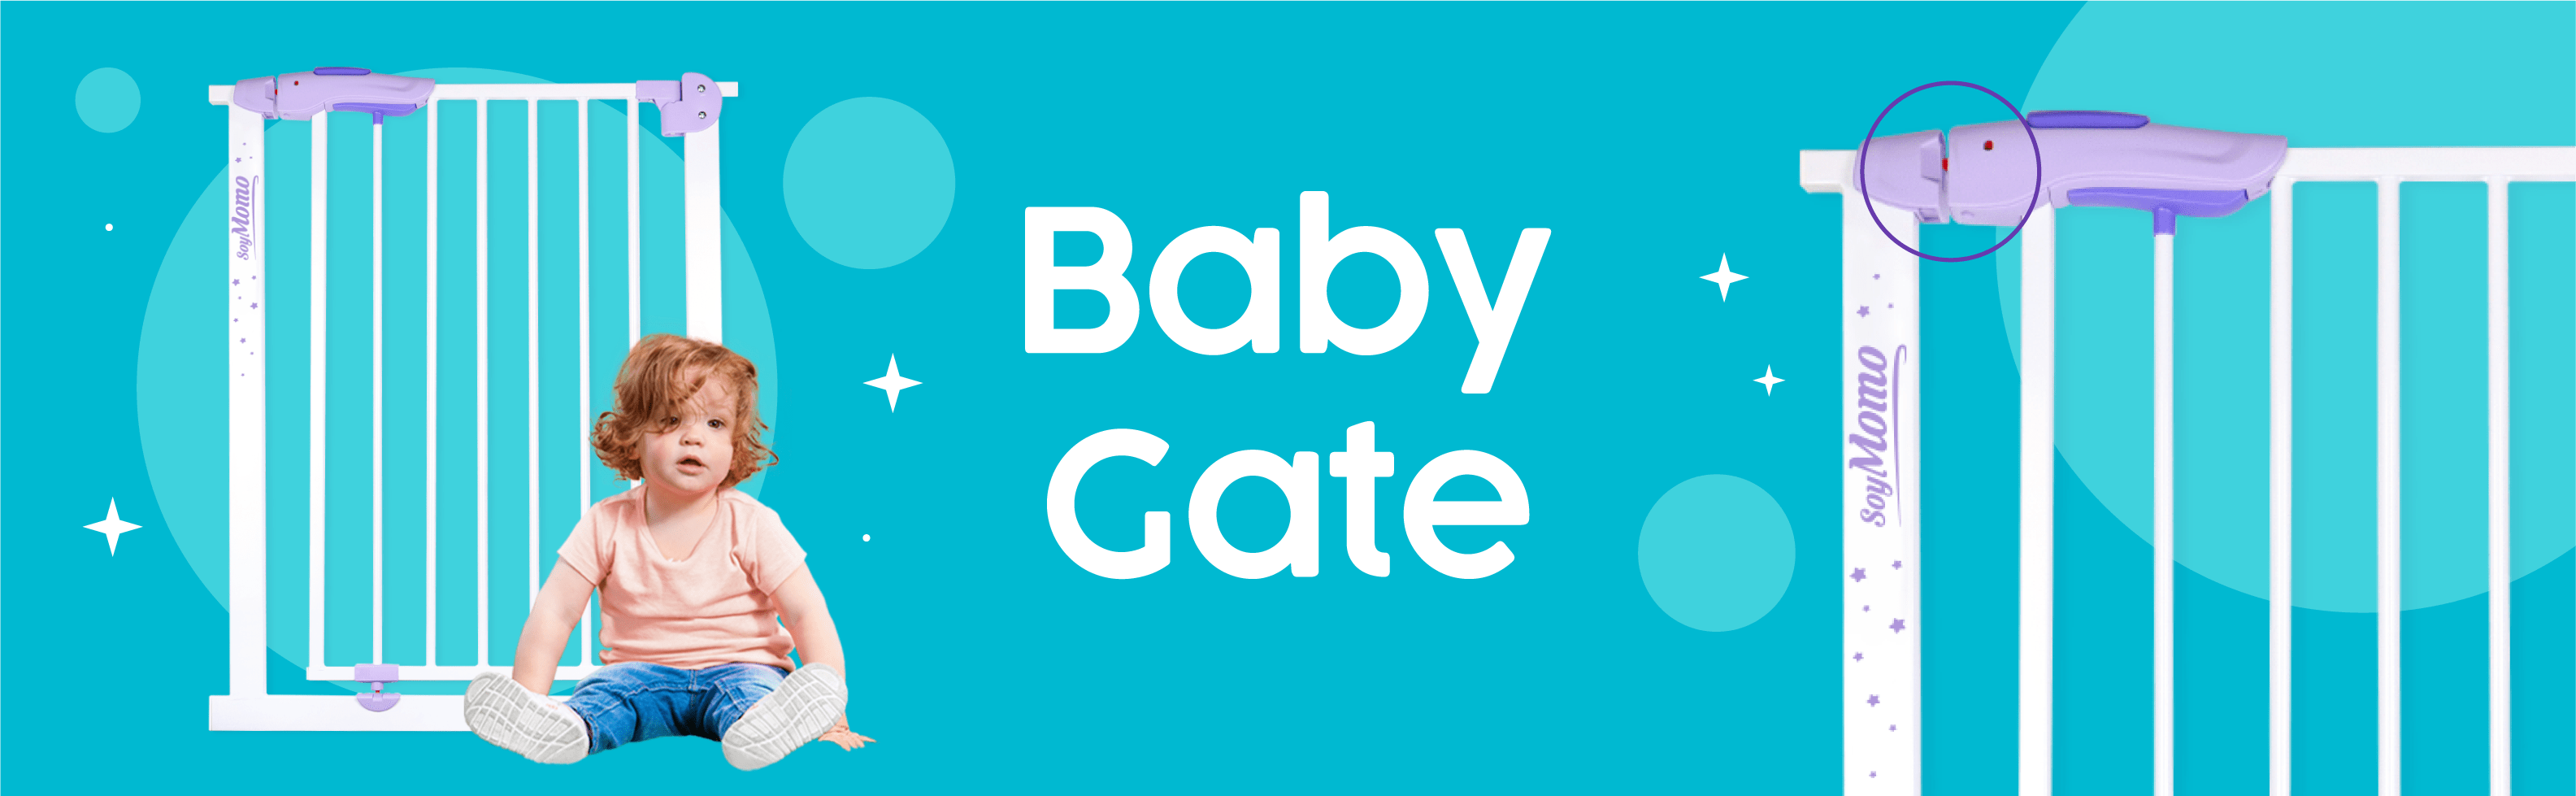 Baby Gate_Banner desktop-min.png__PID:e8d422a4-115d-4387-bc01-2ec74981002c